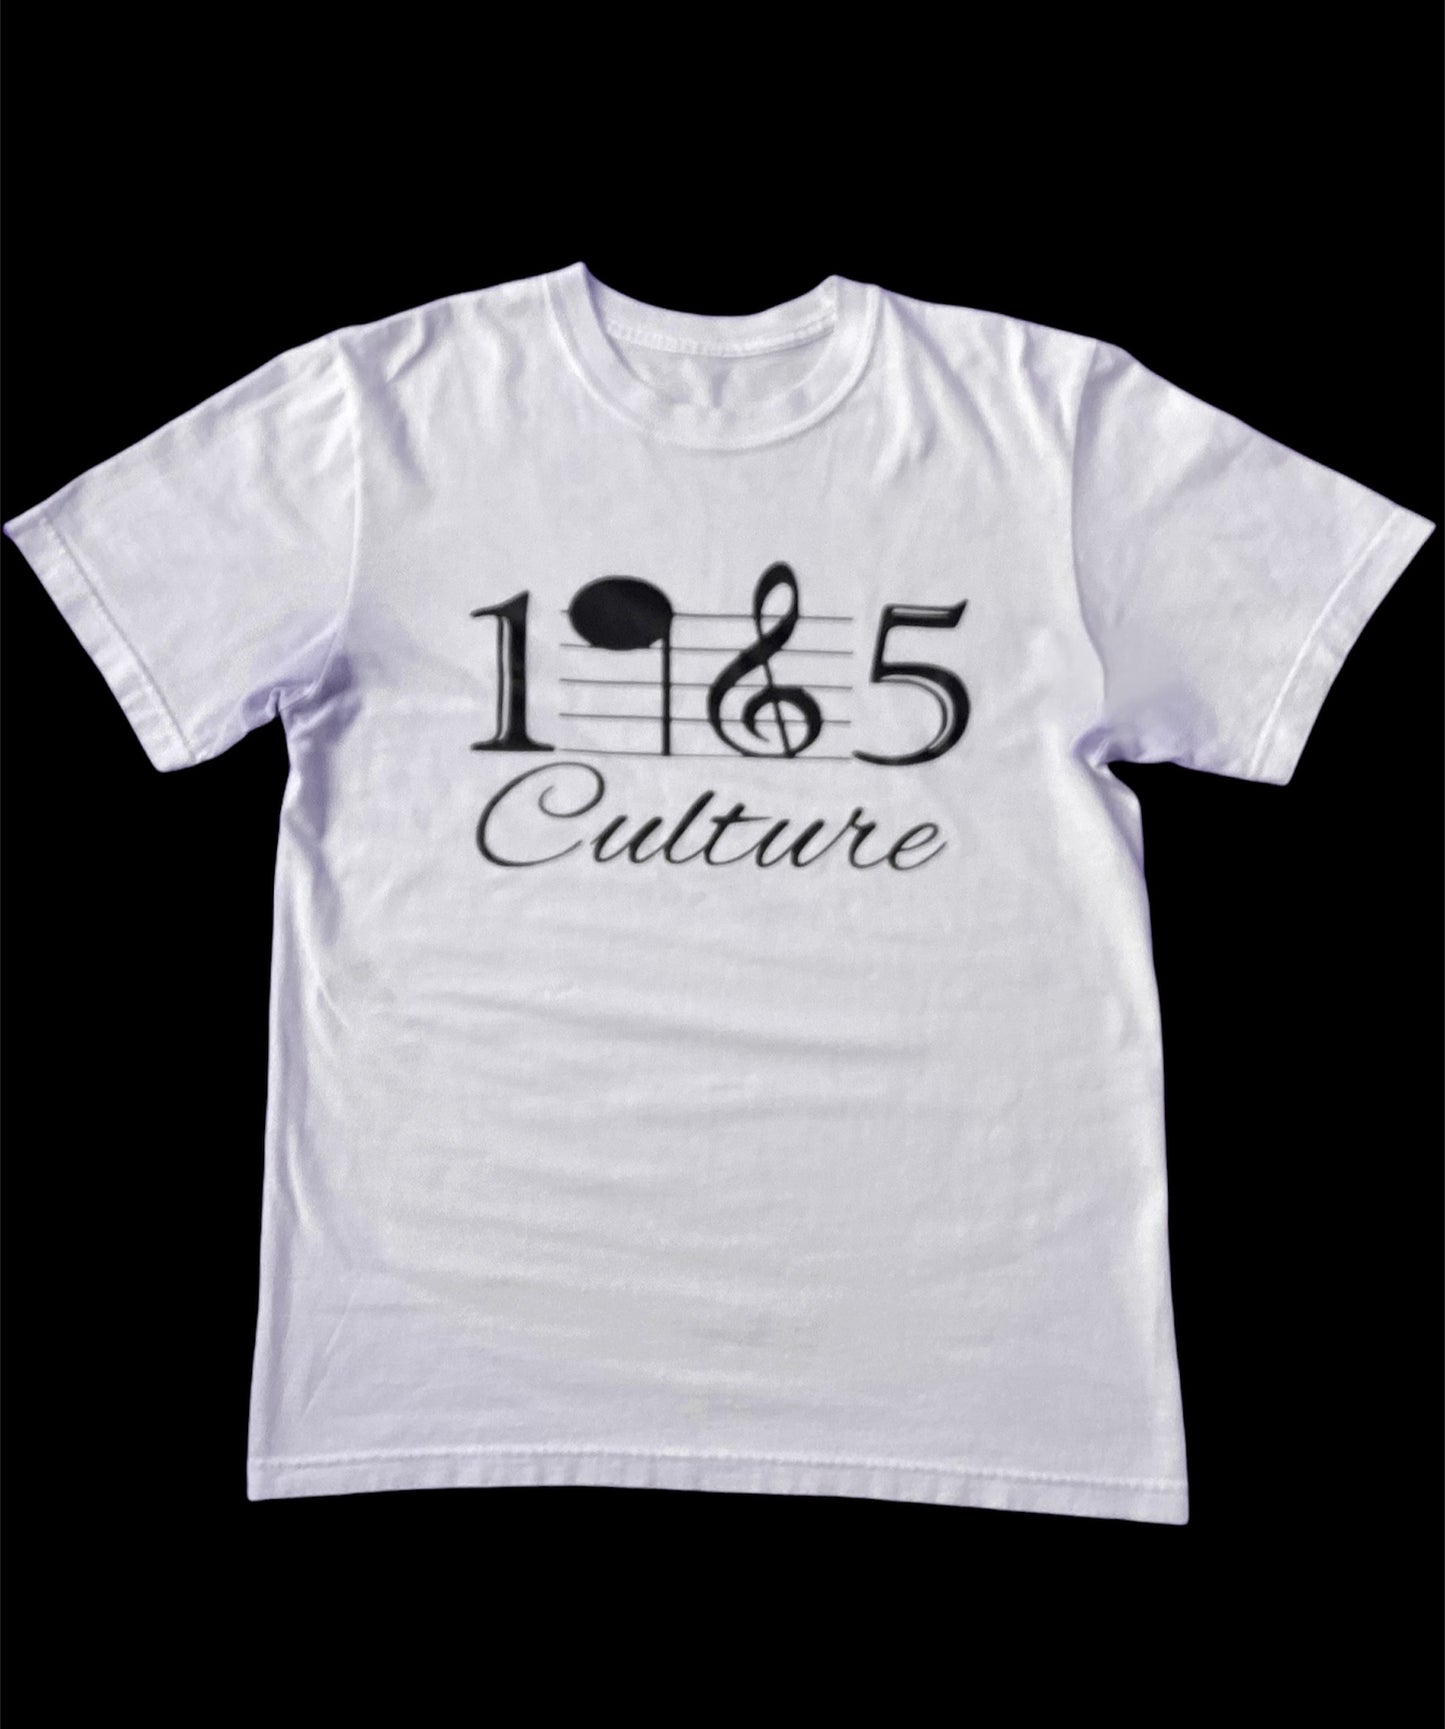 1985 Signature T-Shirt (Assorted colors)